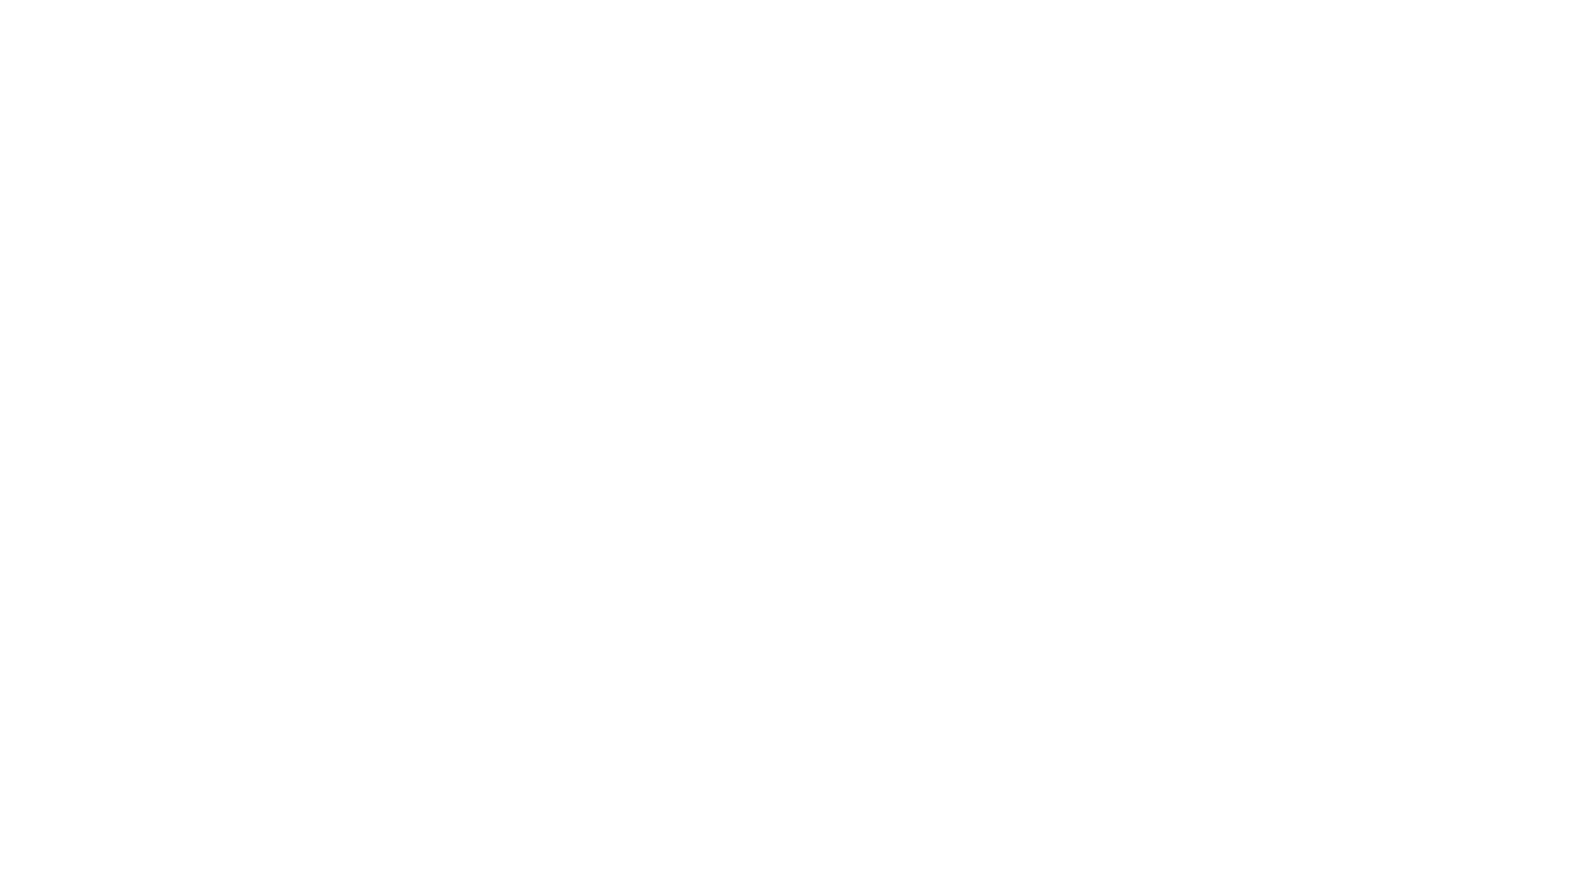 Smurfit Kappa Group logo pour fonds sombres (PNG transparent)